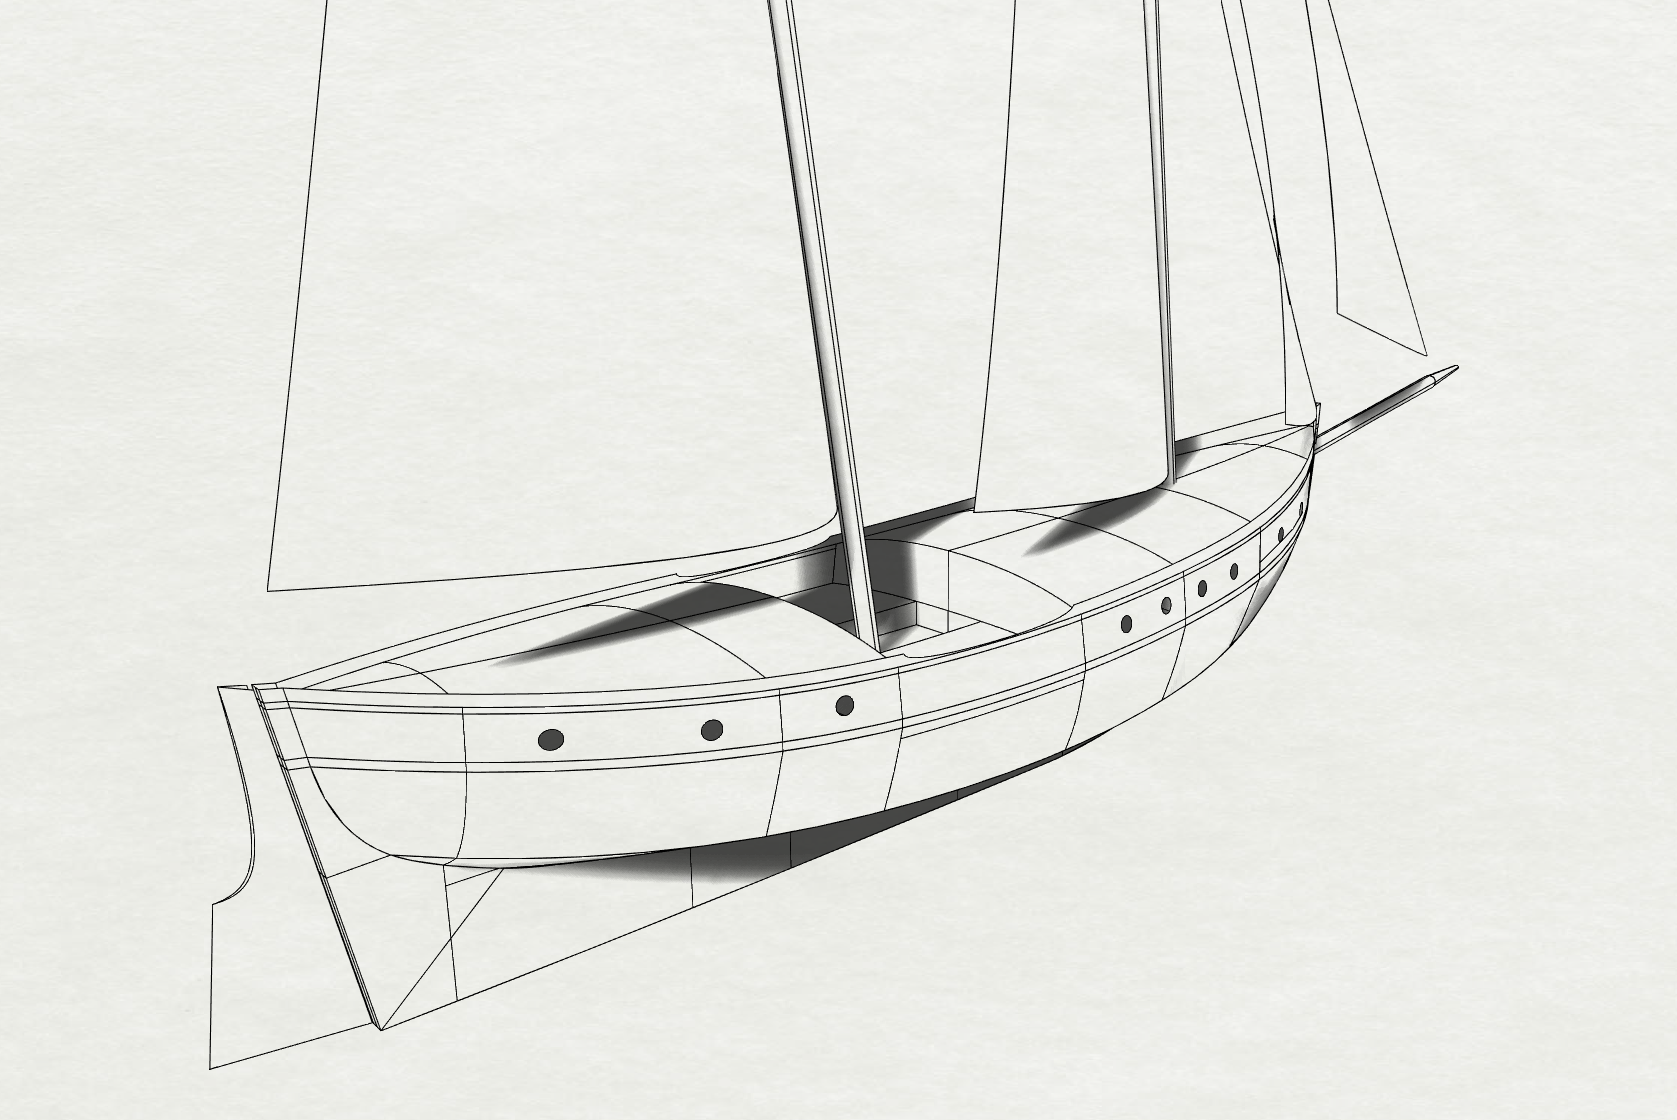 55' VALKYRIE - Pelagic Sailing Vessel - Kasten Marine Design, Inc.